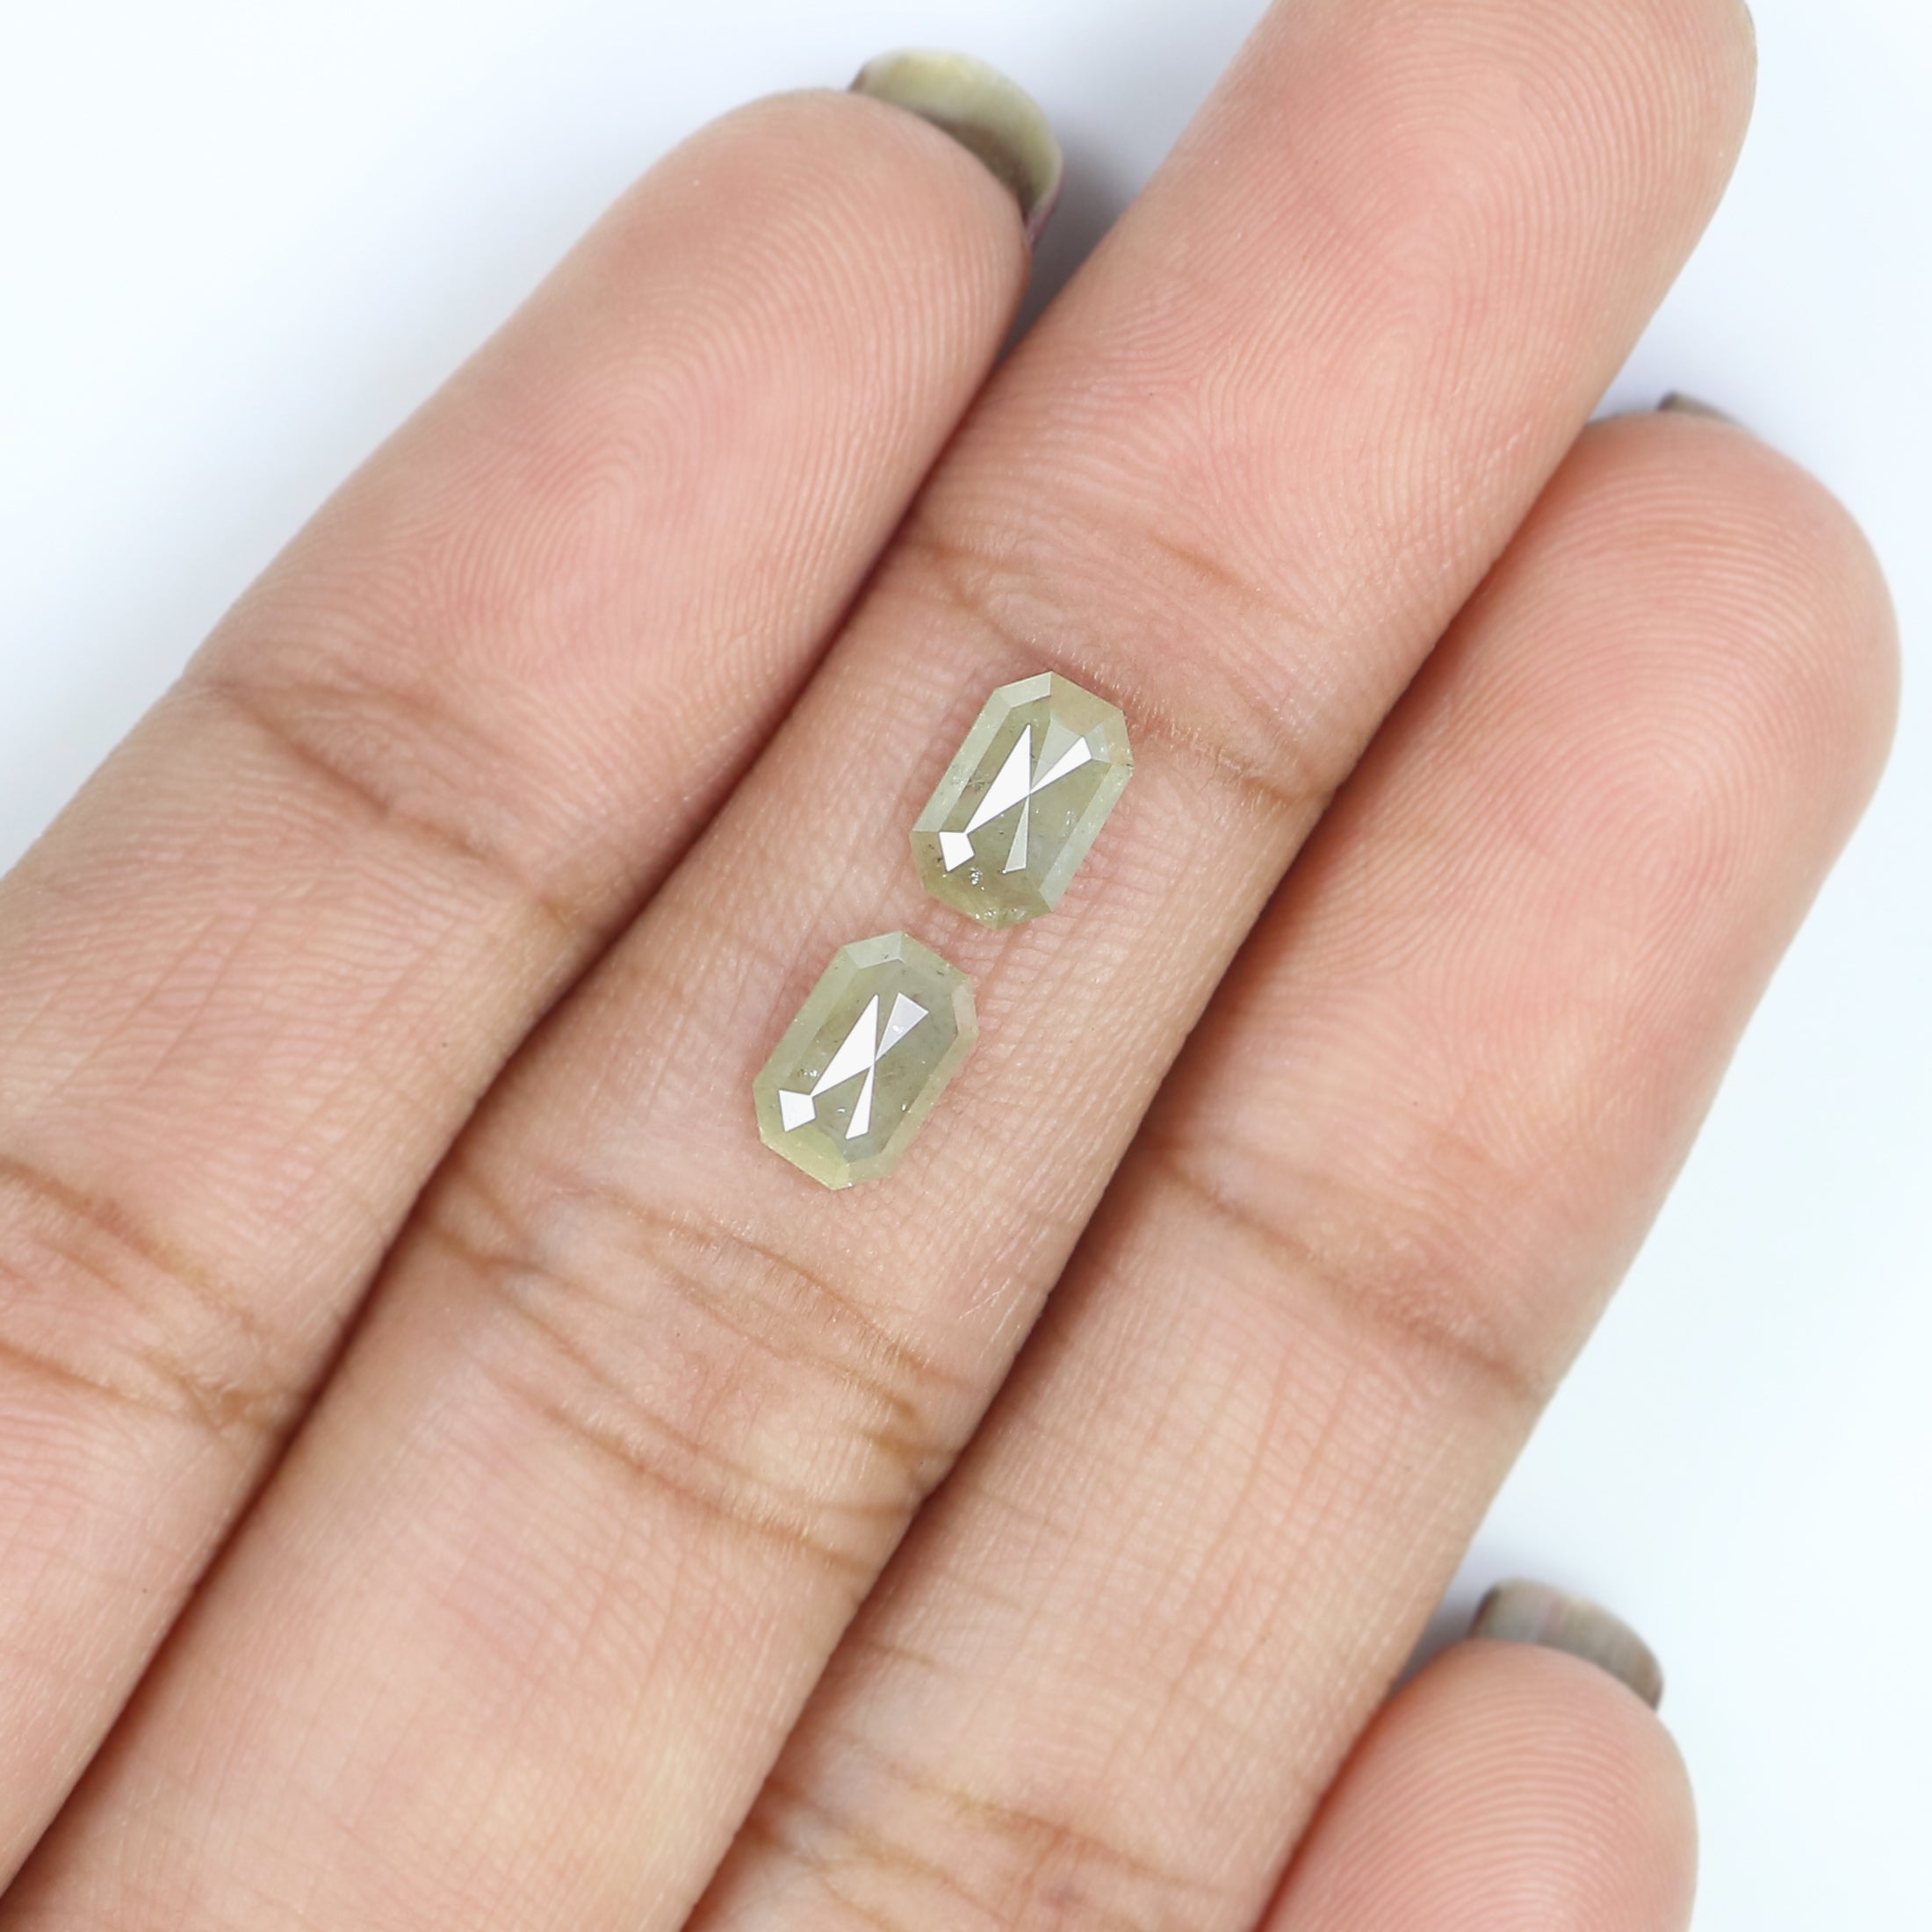 1.12 CT Natural Loose Emerald Pair Diamond Grey Color Diamond 6.40 MM Natural Loose Diamond Emerald Diamond Emerald Cut Pair Diamond KQ2720